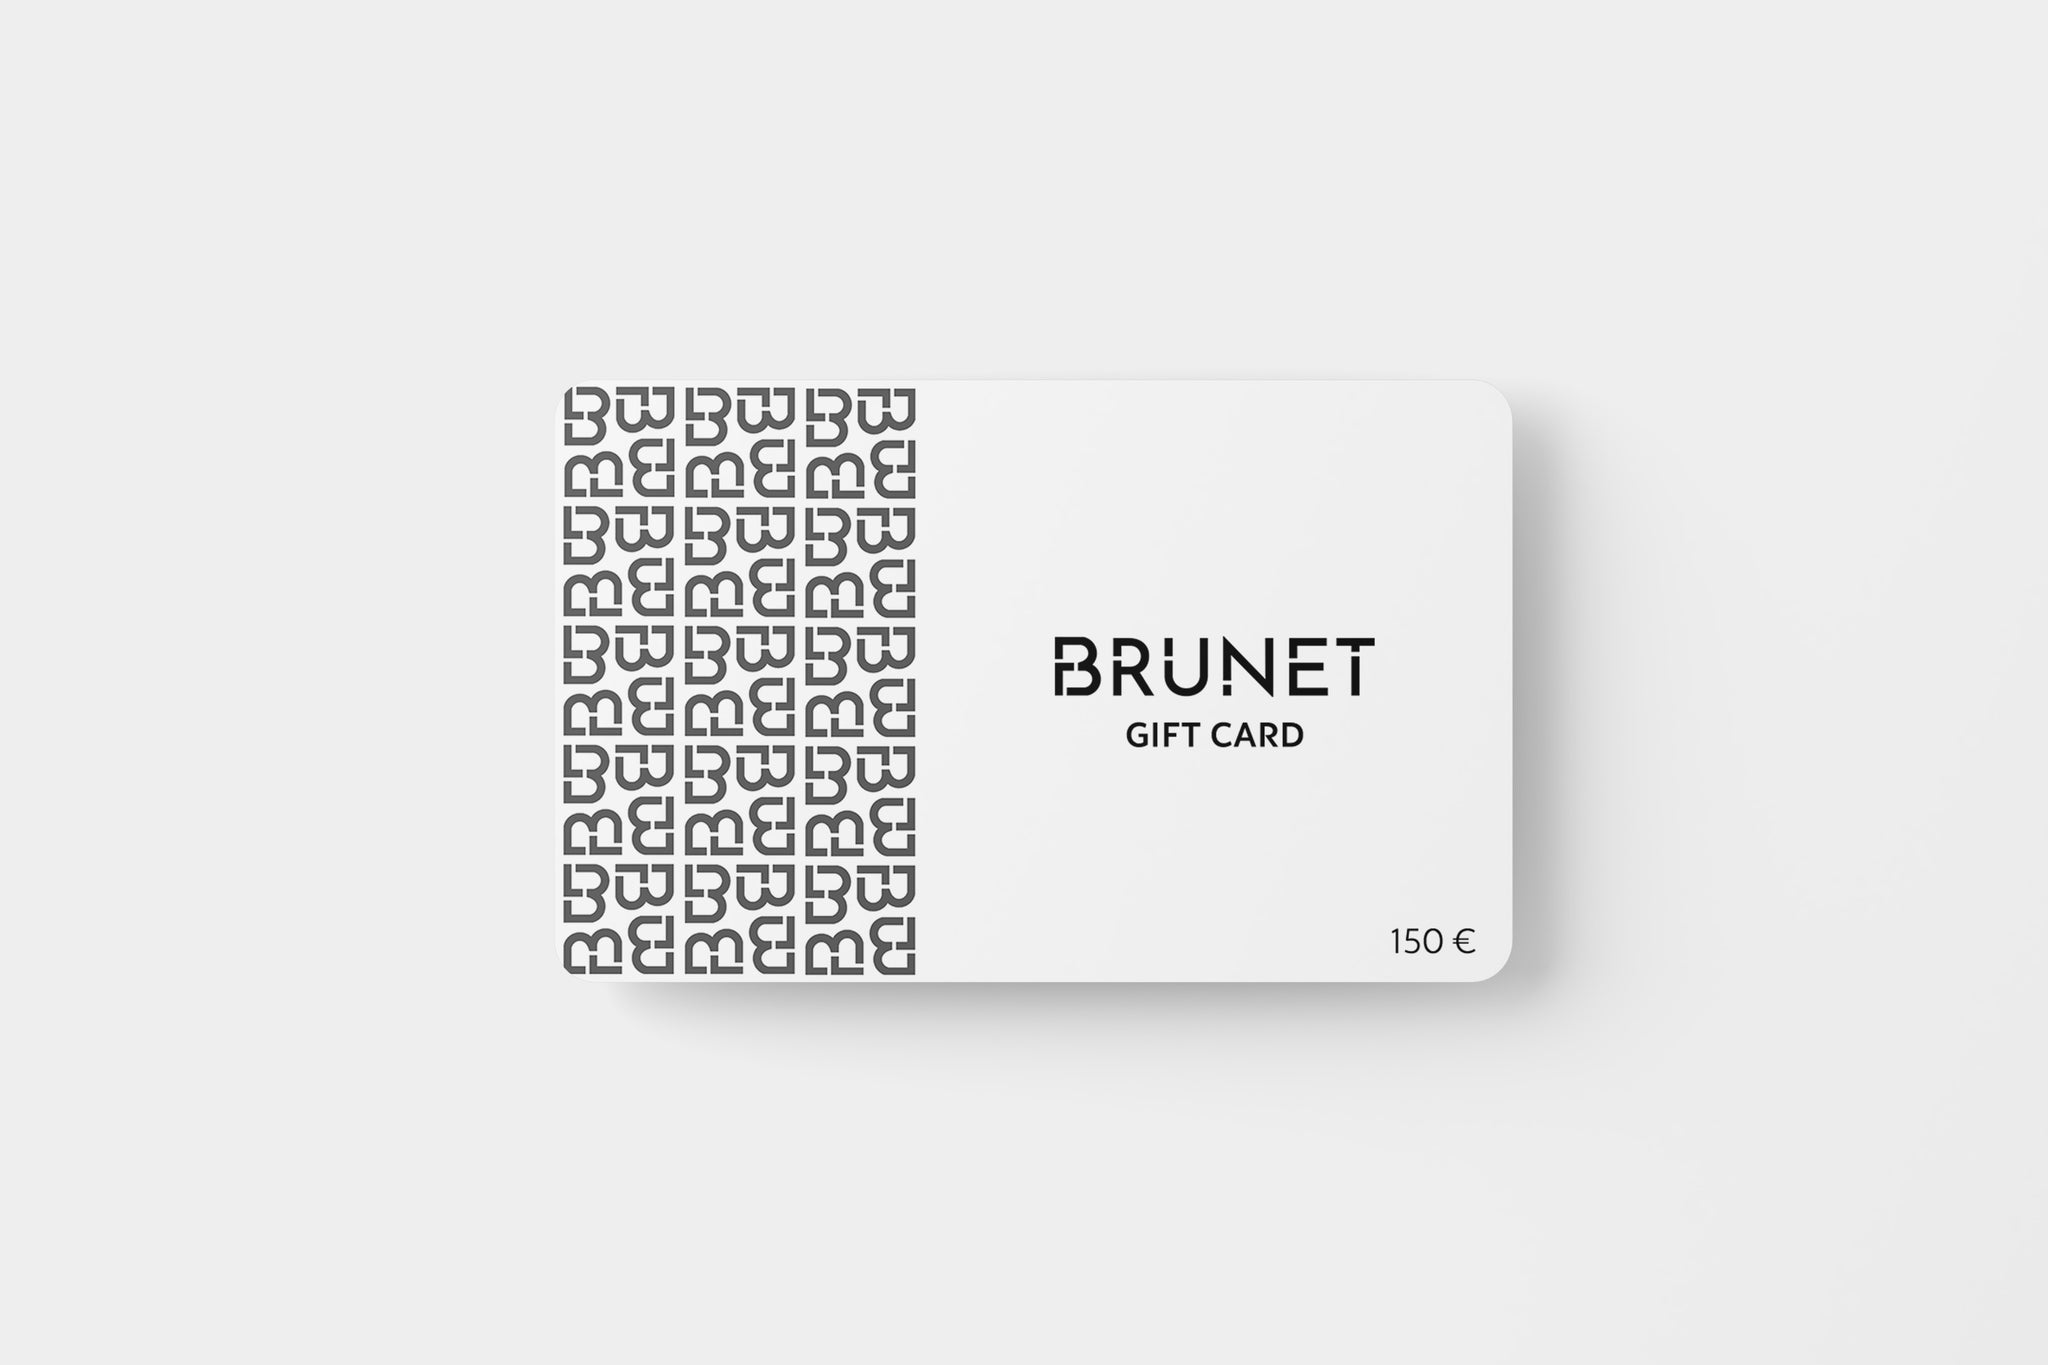 BRUNET GIFT CARD